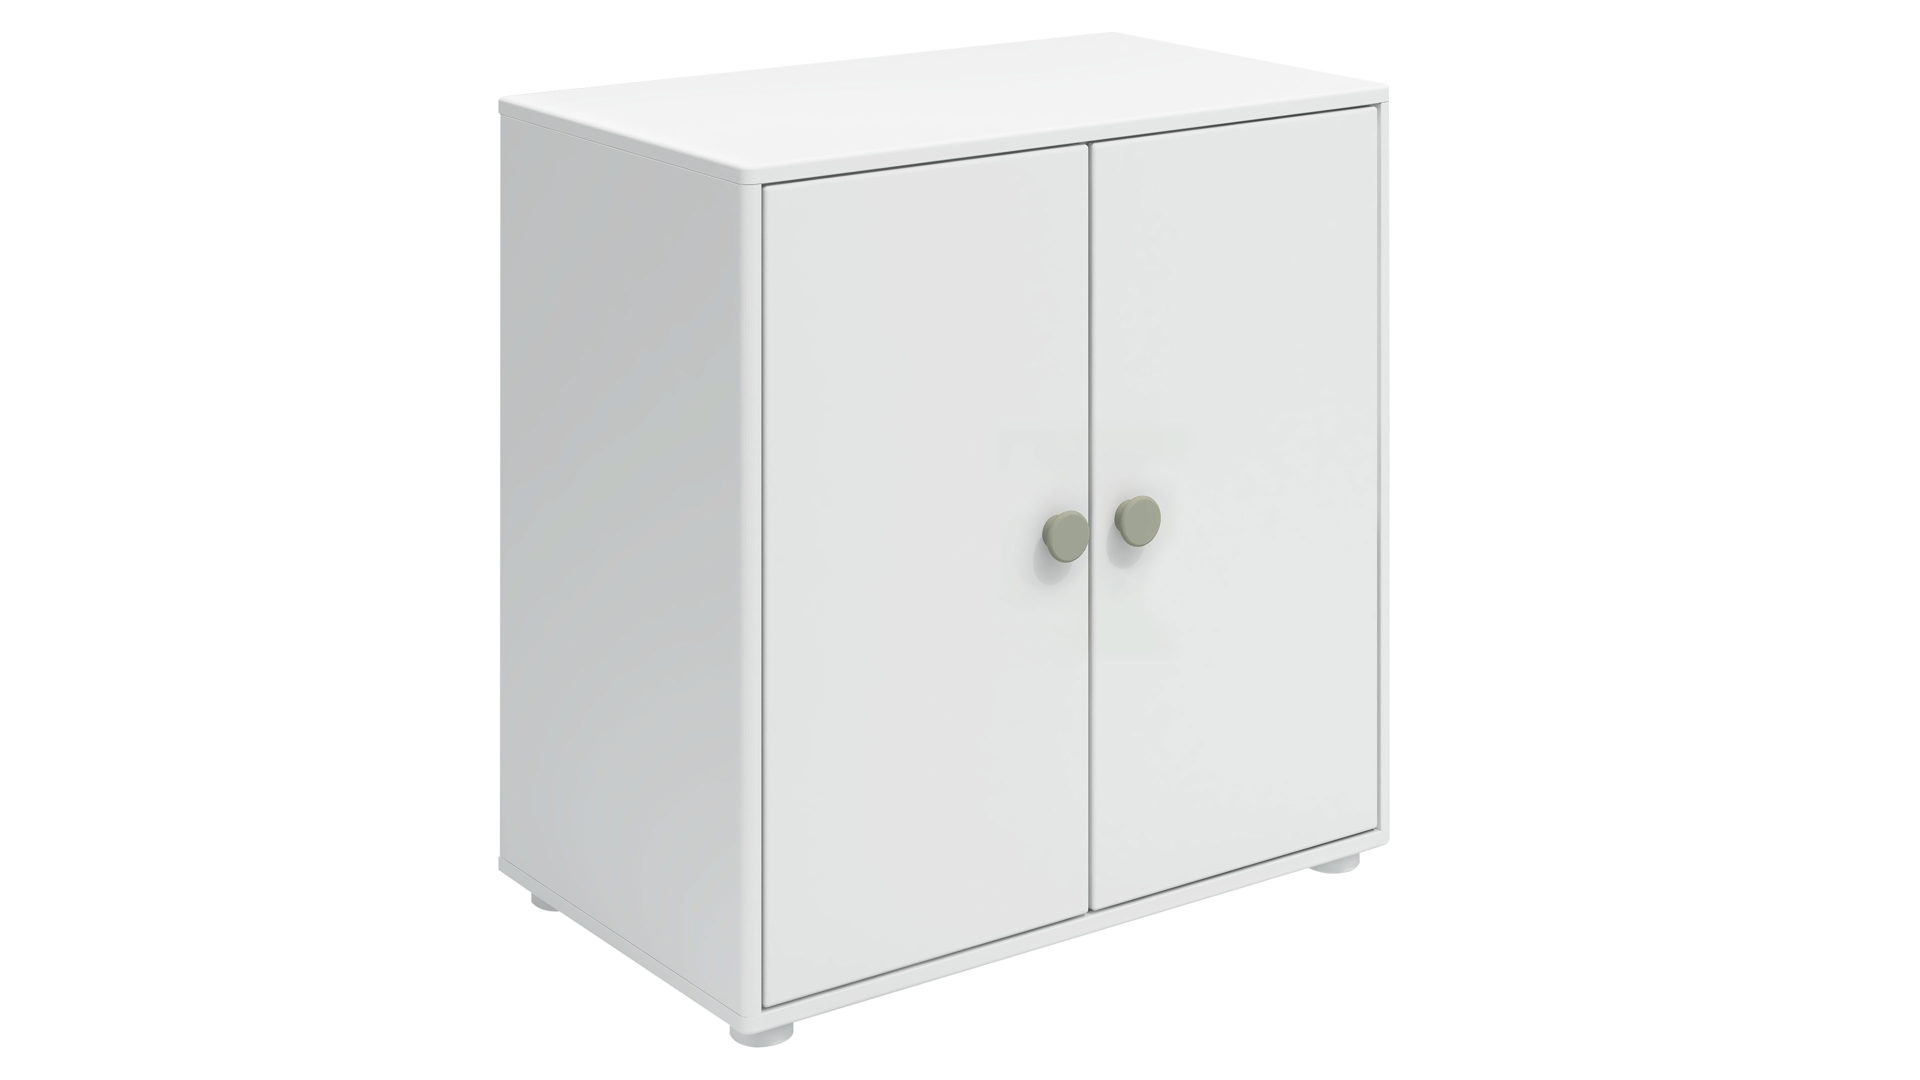 Türenkommode Flexa® aus Holz in Weiß FLEXA® Kindermöbel Serie Roomie - Türenkommode Weiß & Naturgrün - zwei Türen, Breite ca. 72 cm